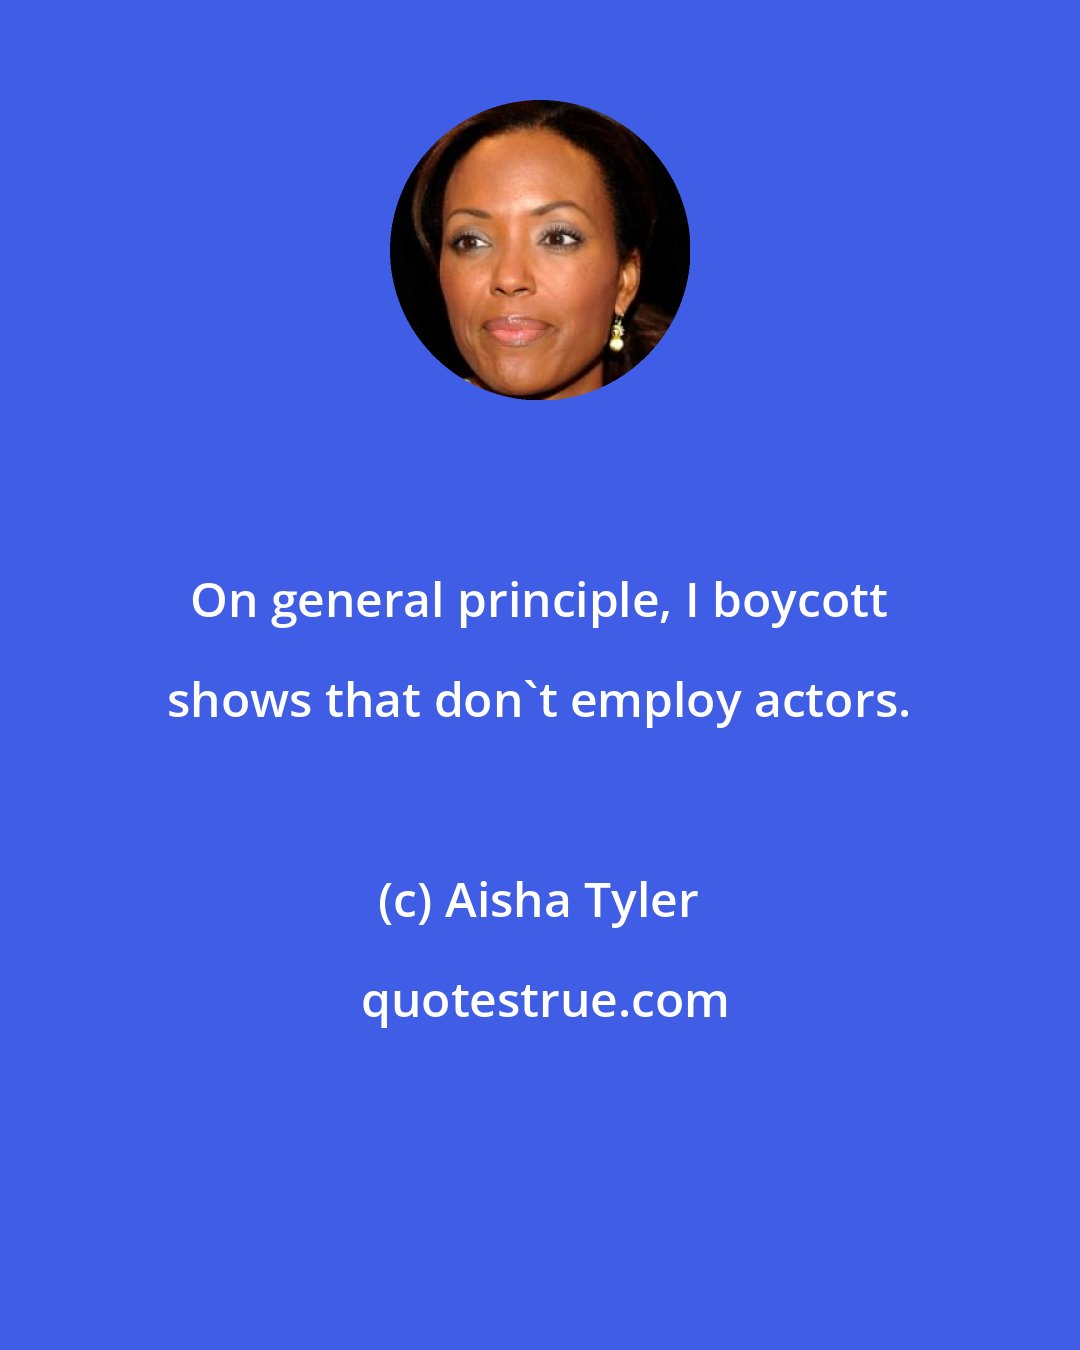 Aisha Tyler: On general principle, I boycott shows that don't employ actors.